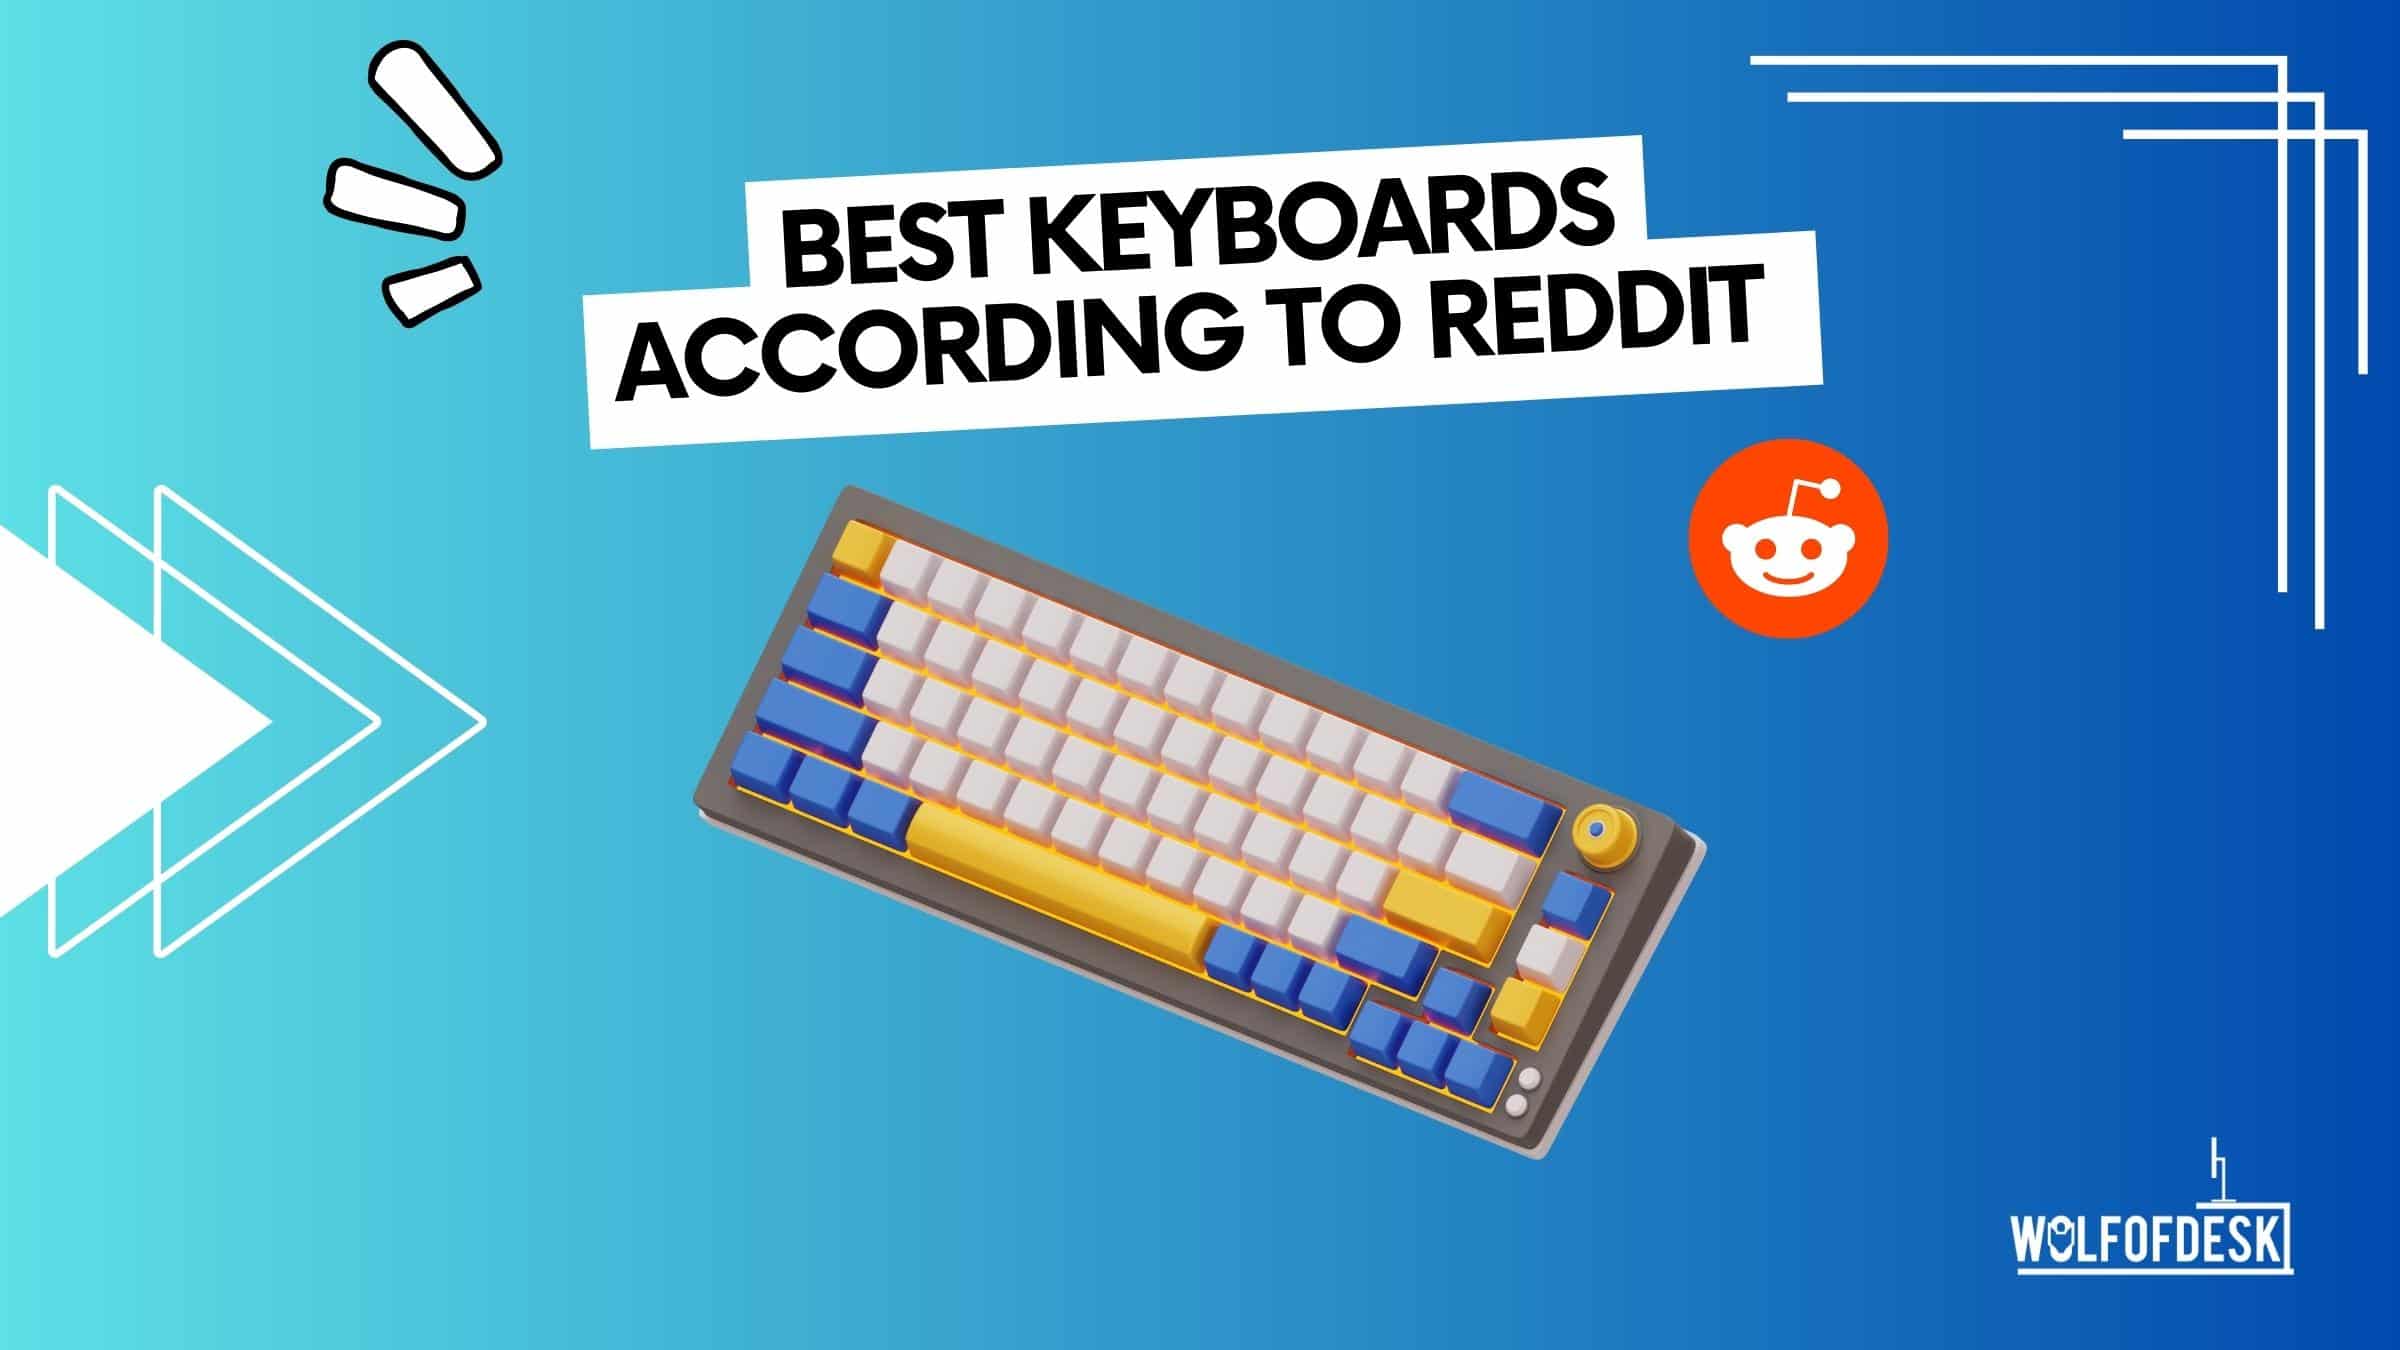 best keyboards according to reddit users